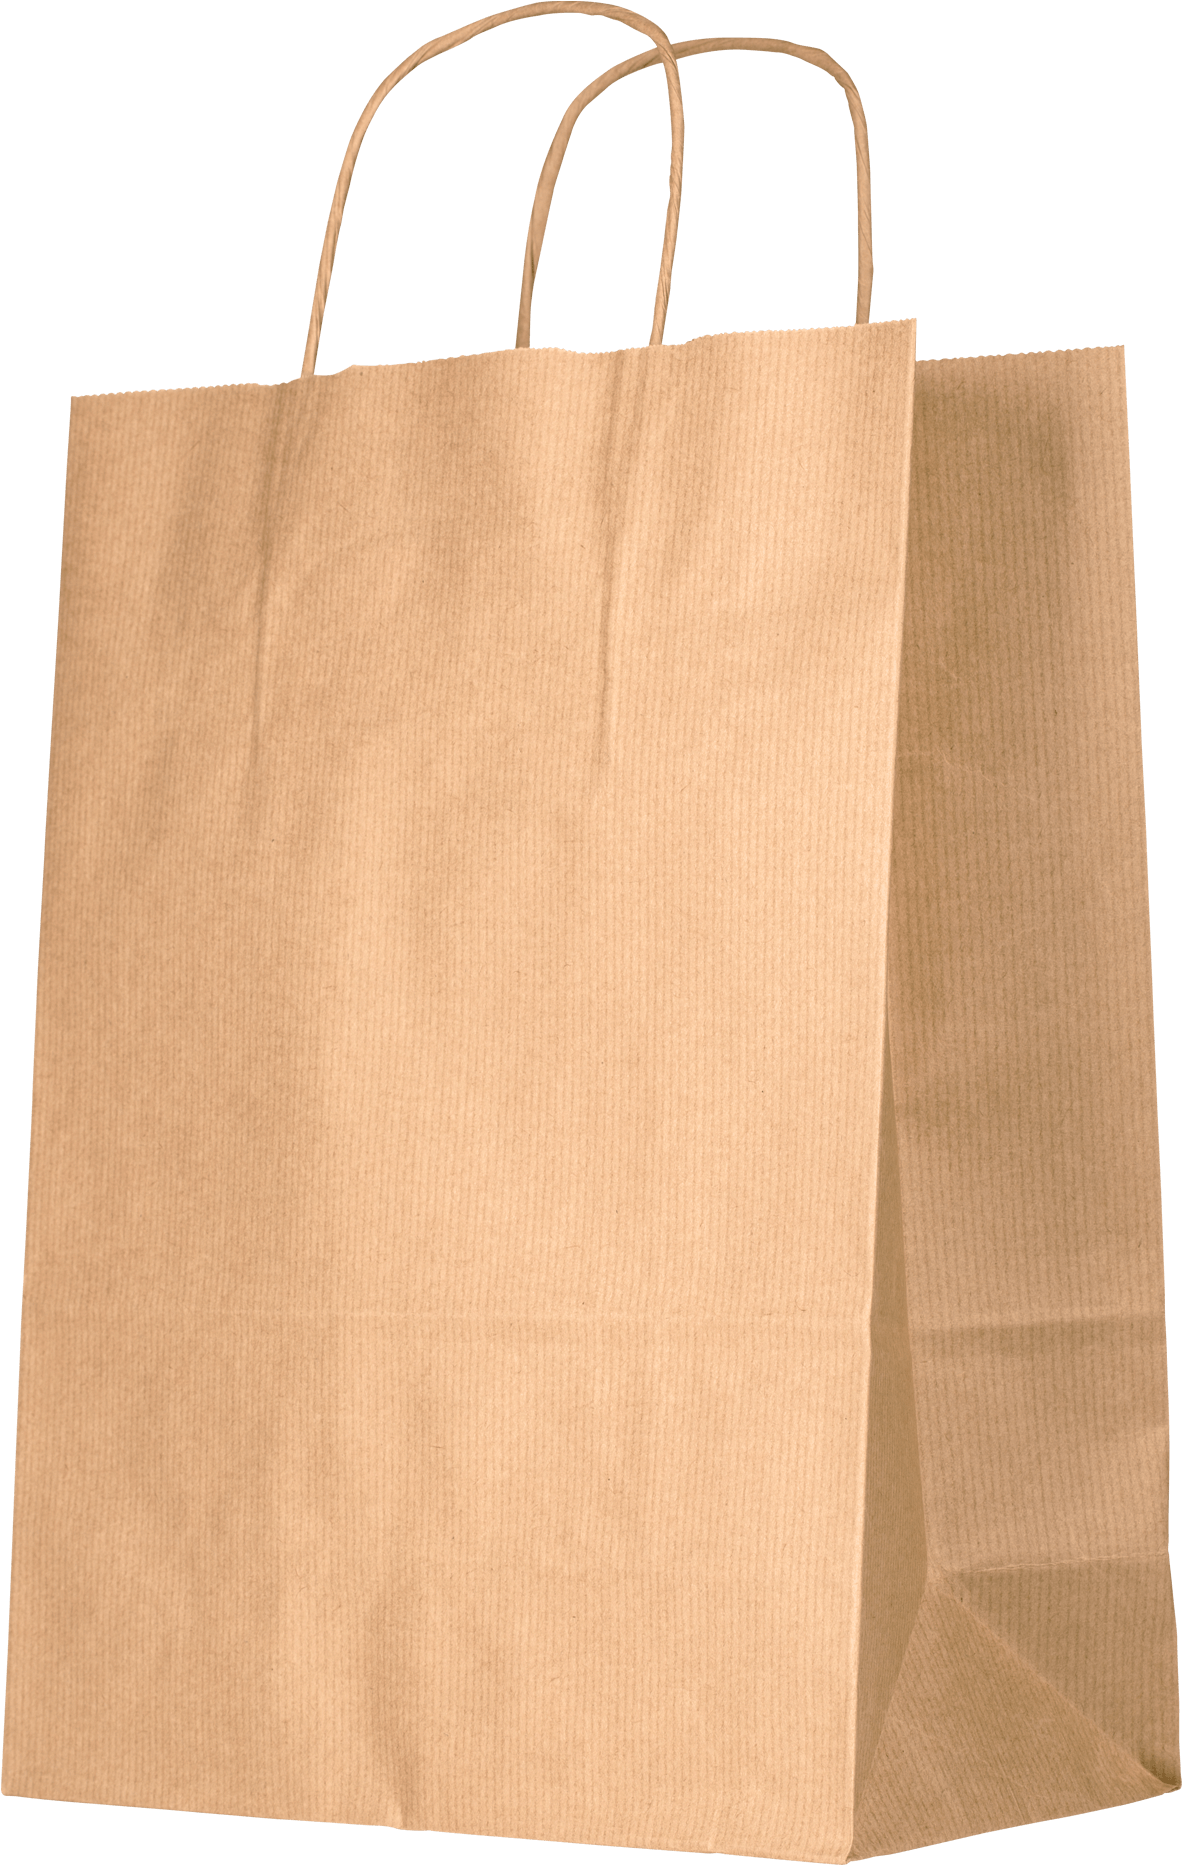 Eco Paper Bag Transparent Image